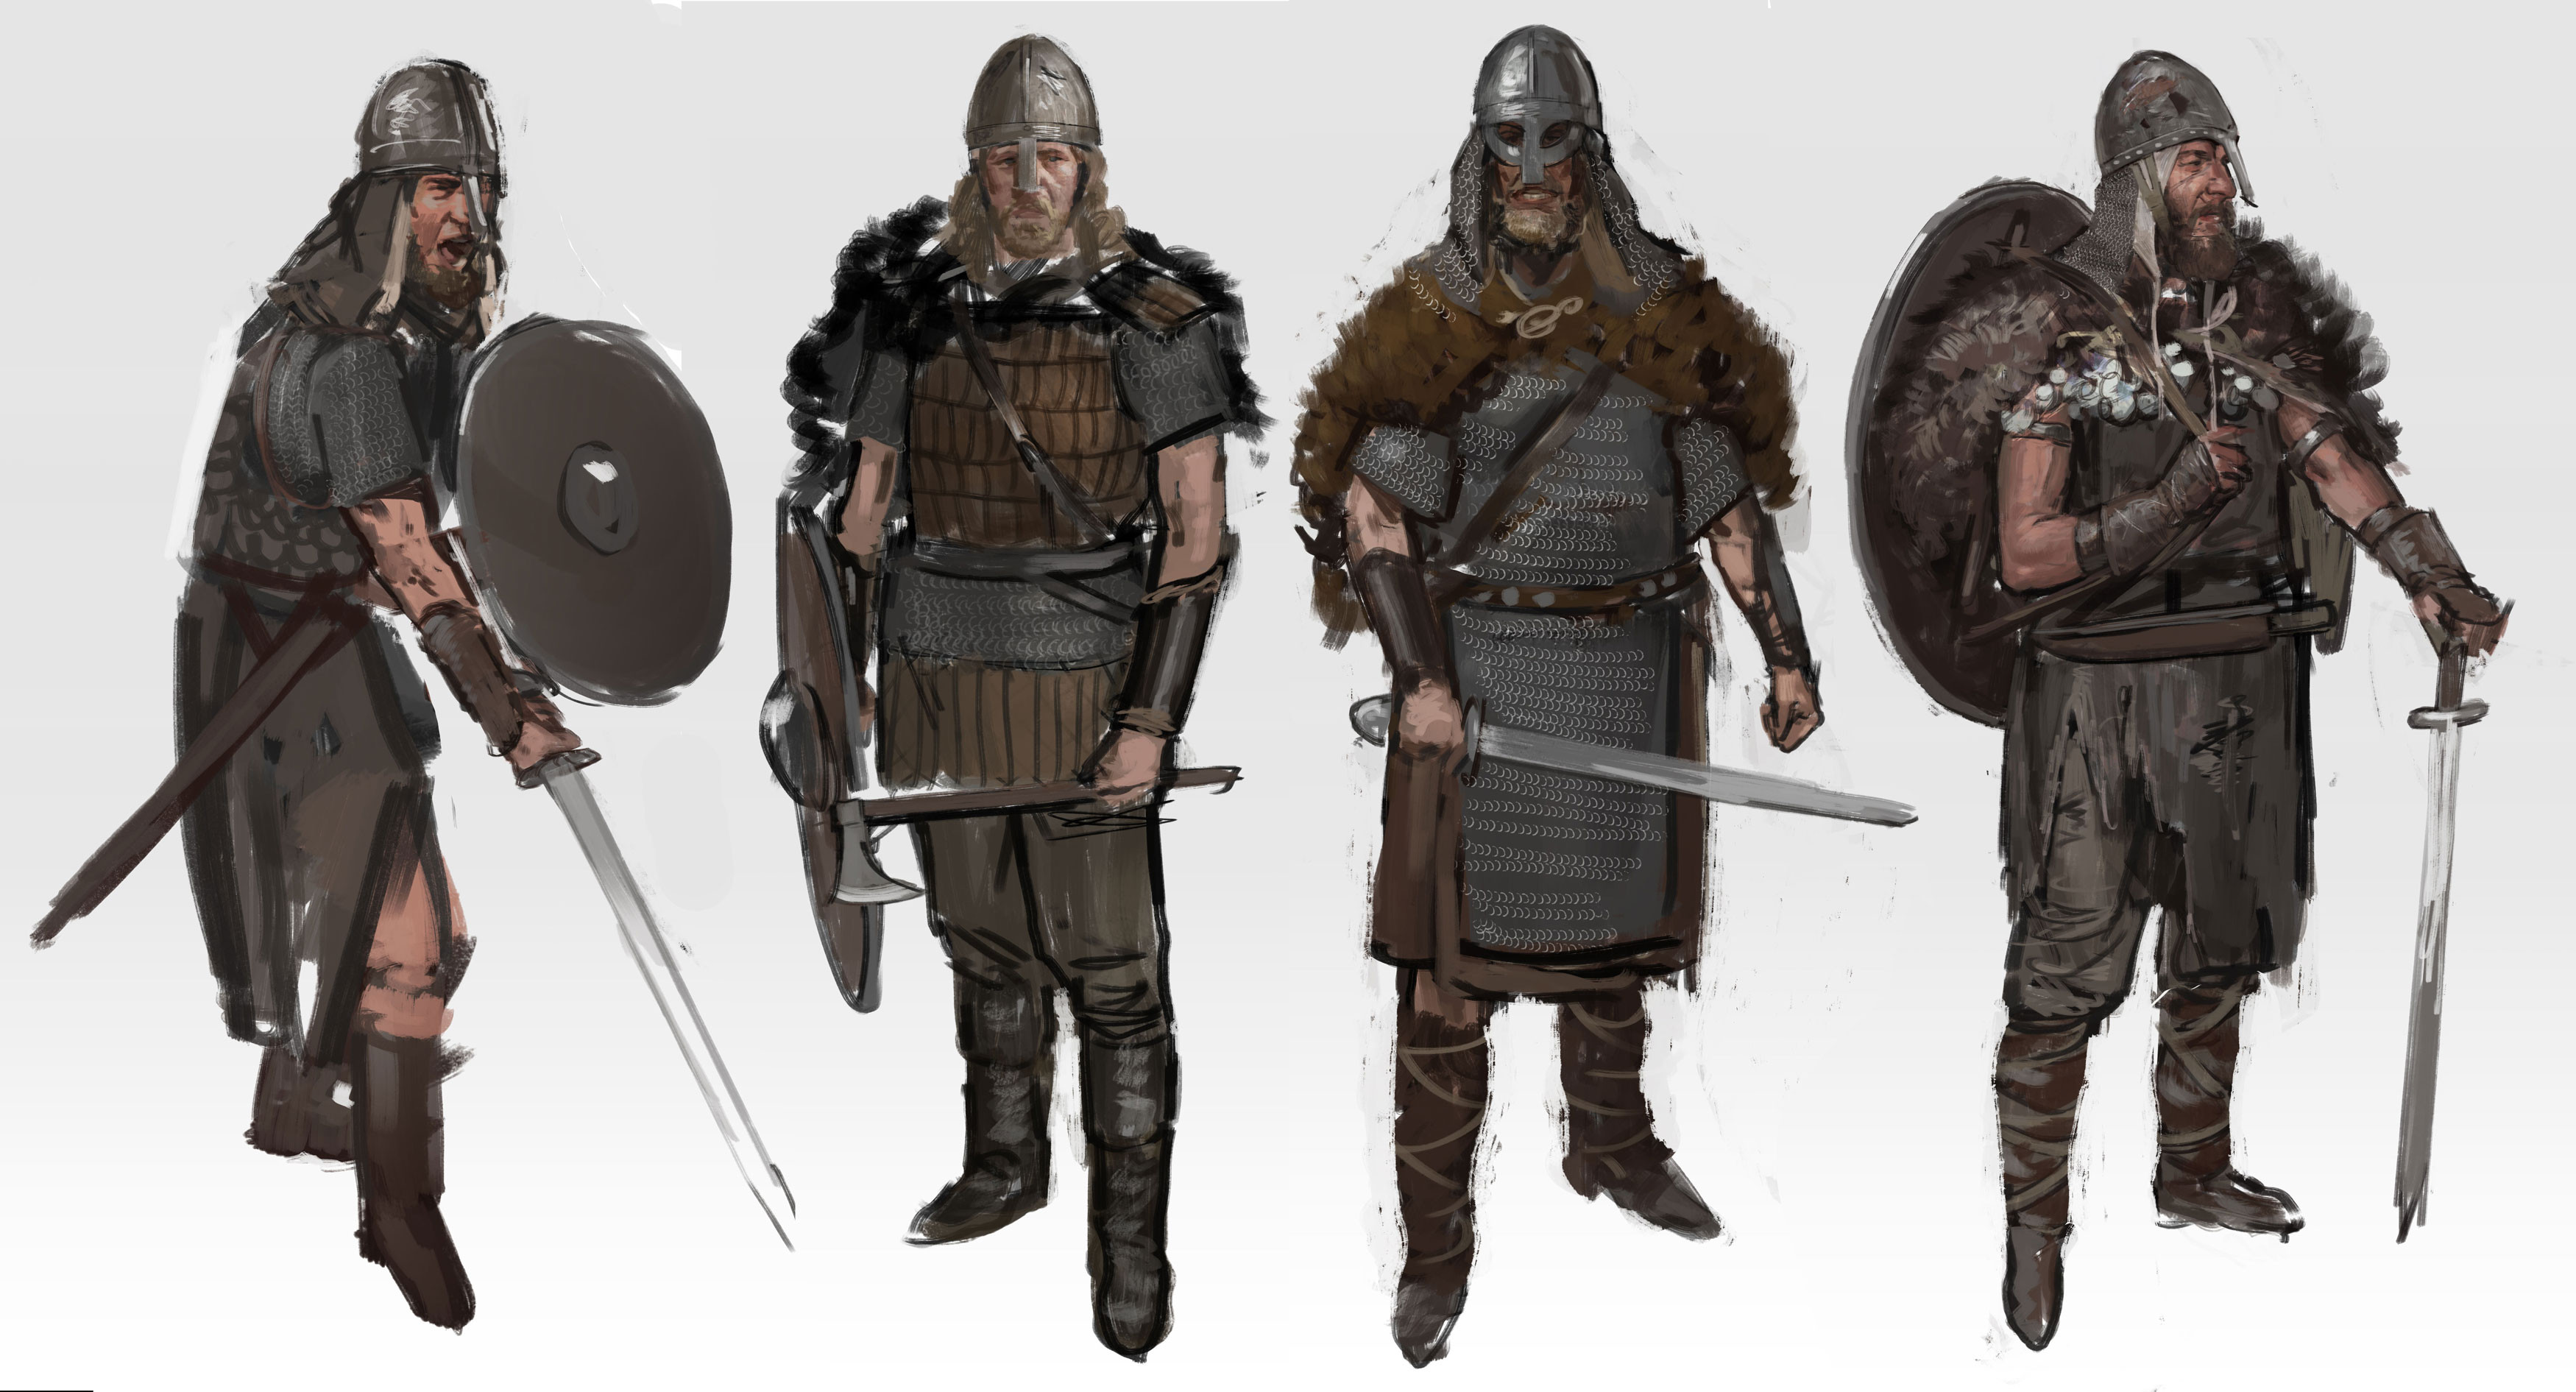 Sketches of Vikings